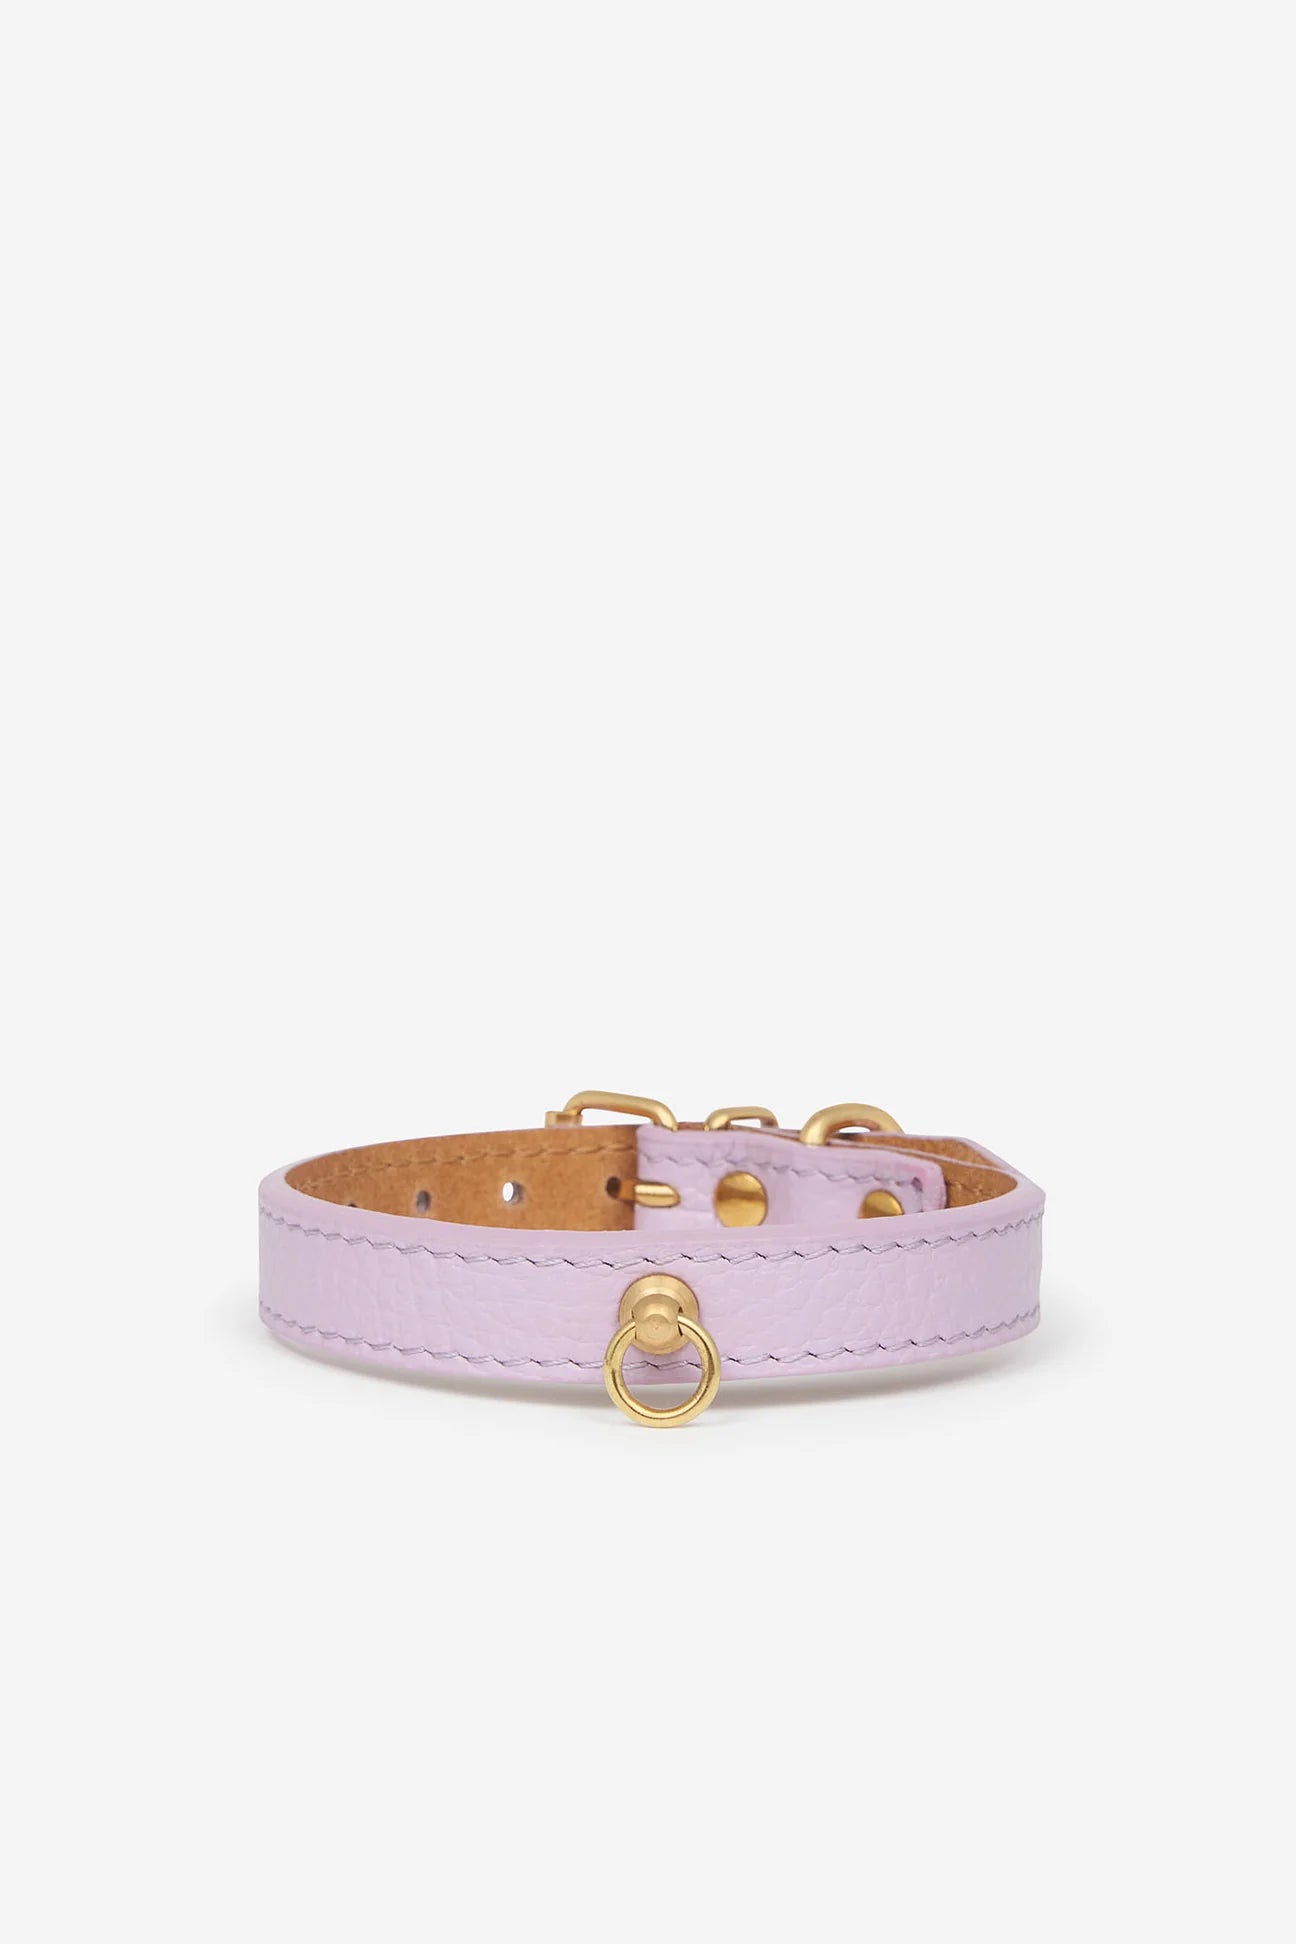 Lavender color leather dog collar